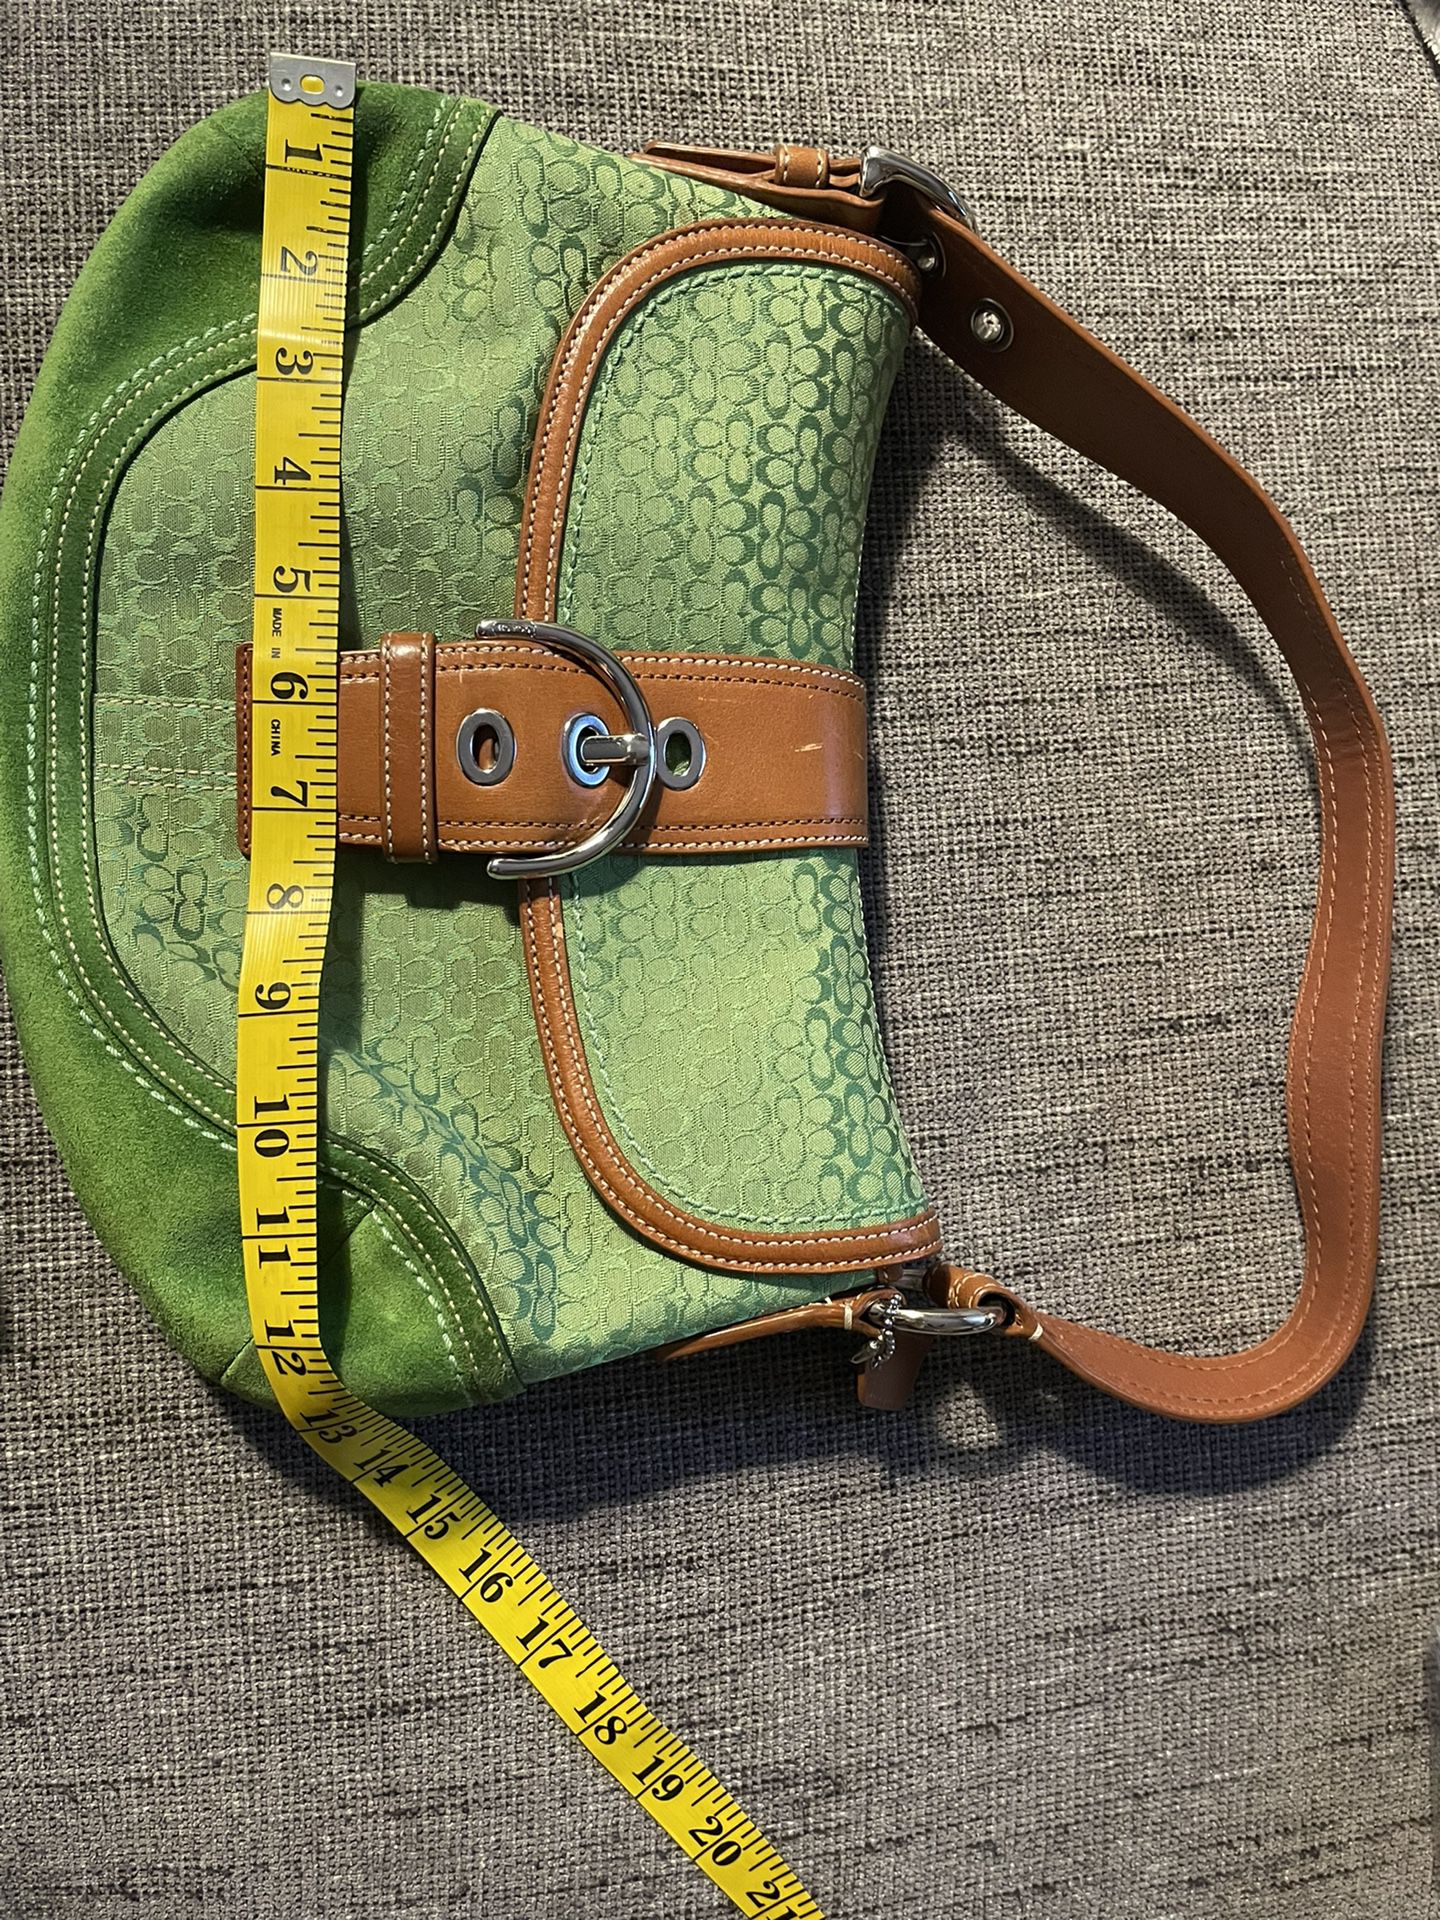 Coach Madison Satchel leather handbag Pleated Metallic for Sale in San  Jose, CA - OfferUp